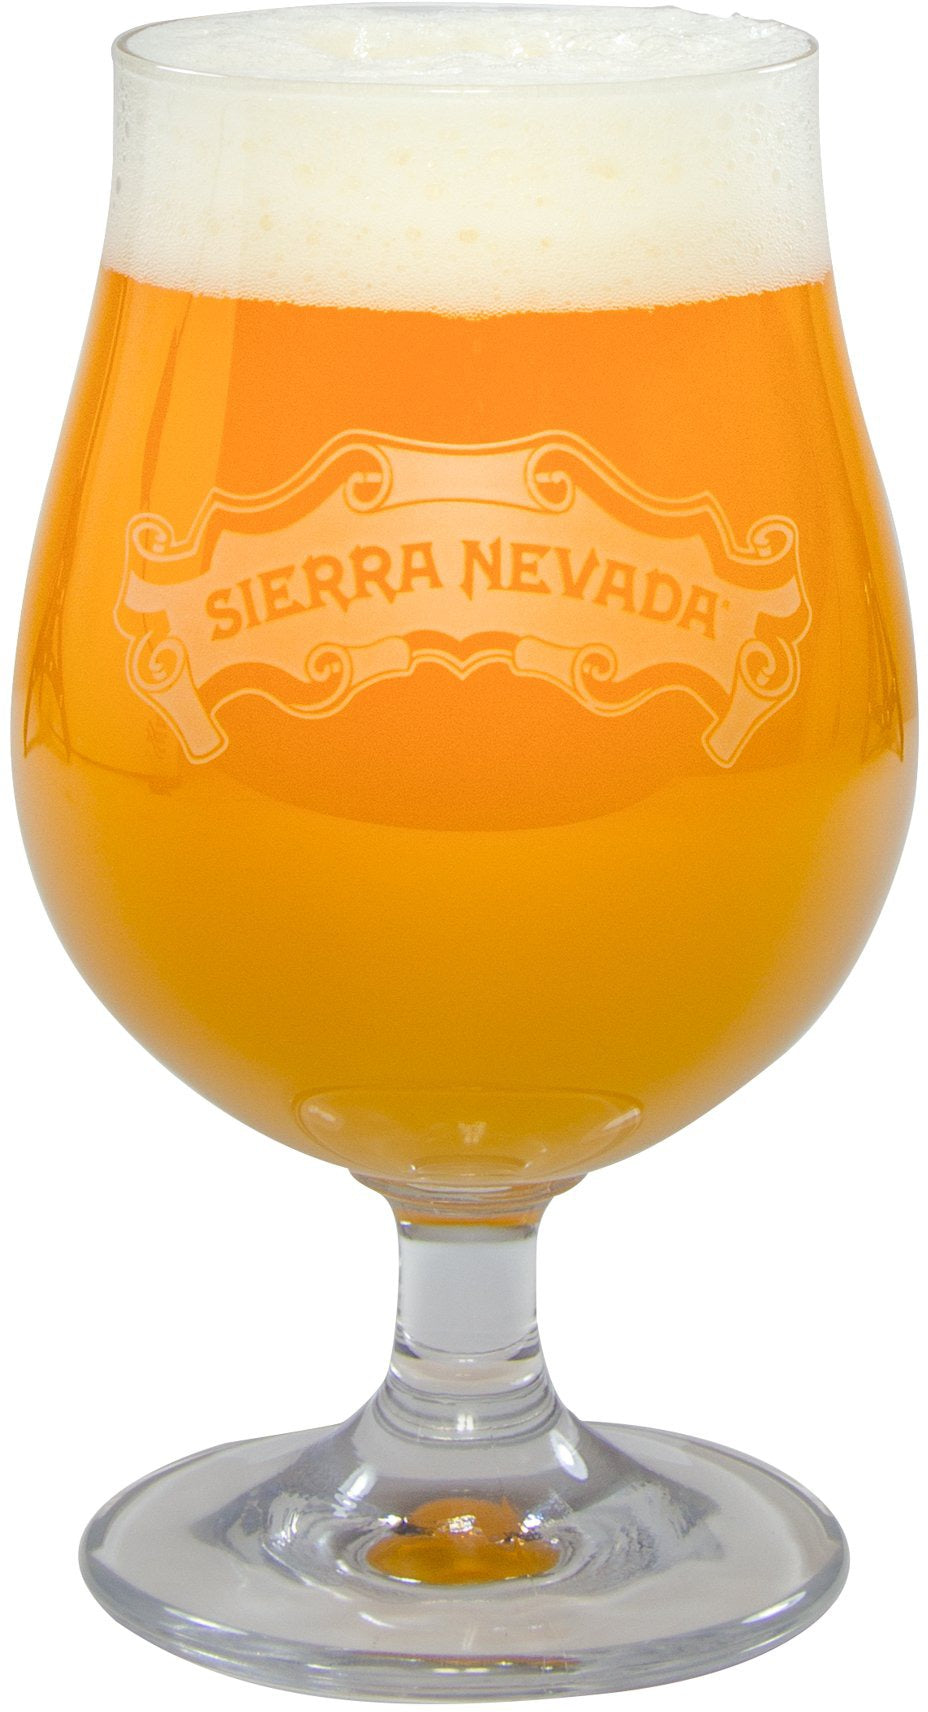 Sierra Nevada - Tulip glass